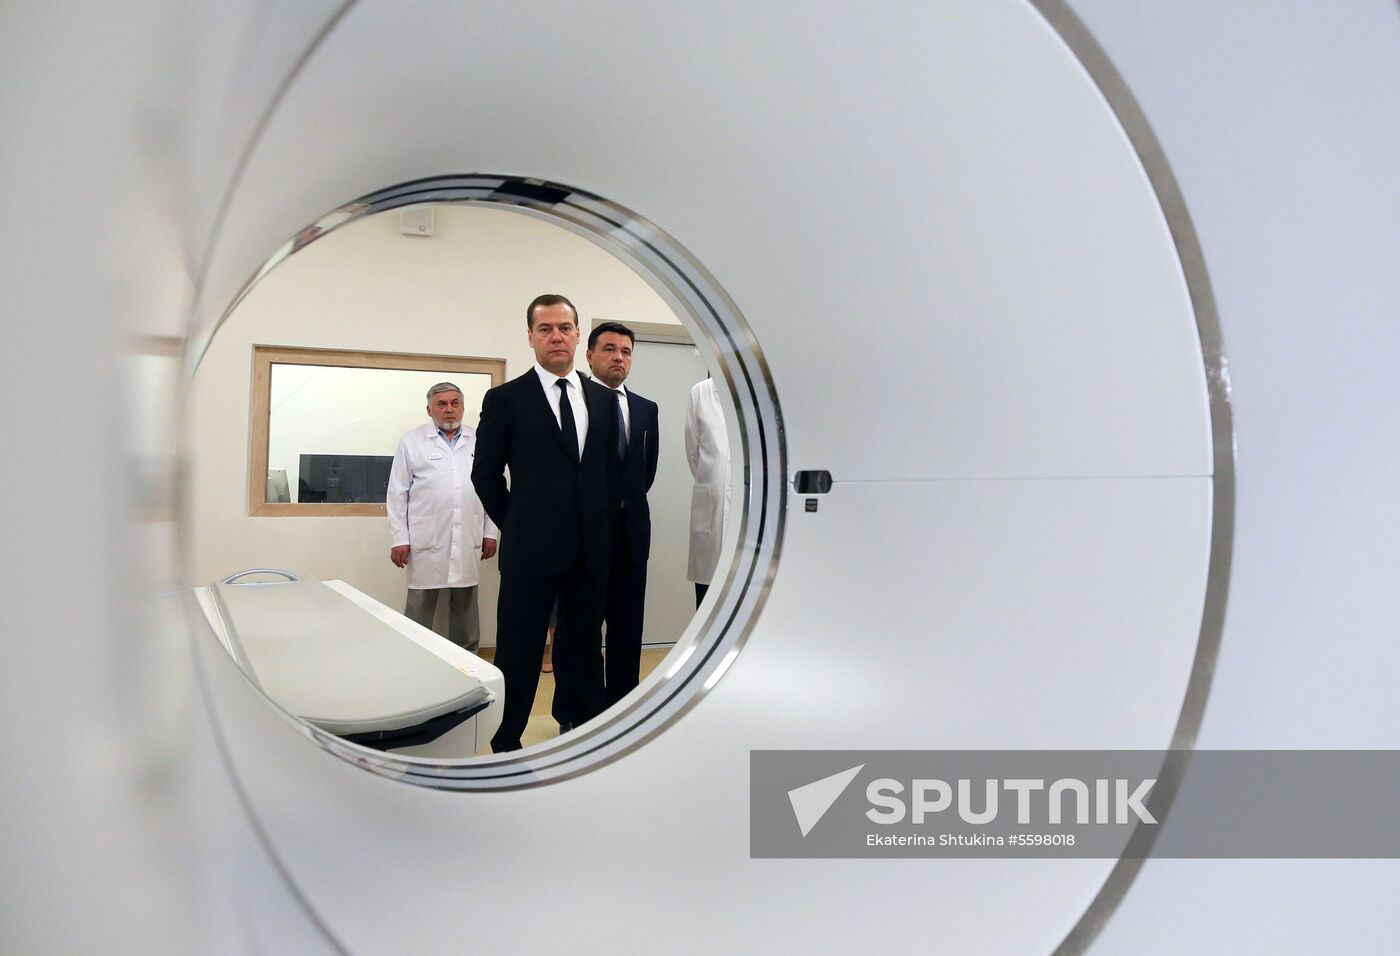 Prime Minister Dmitry Medvedev holds meeting on development of cancer care